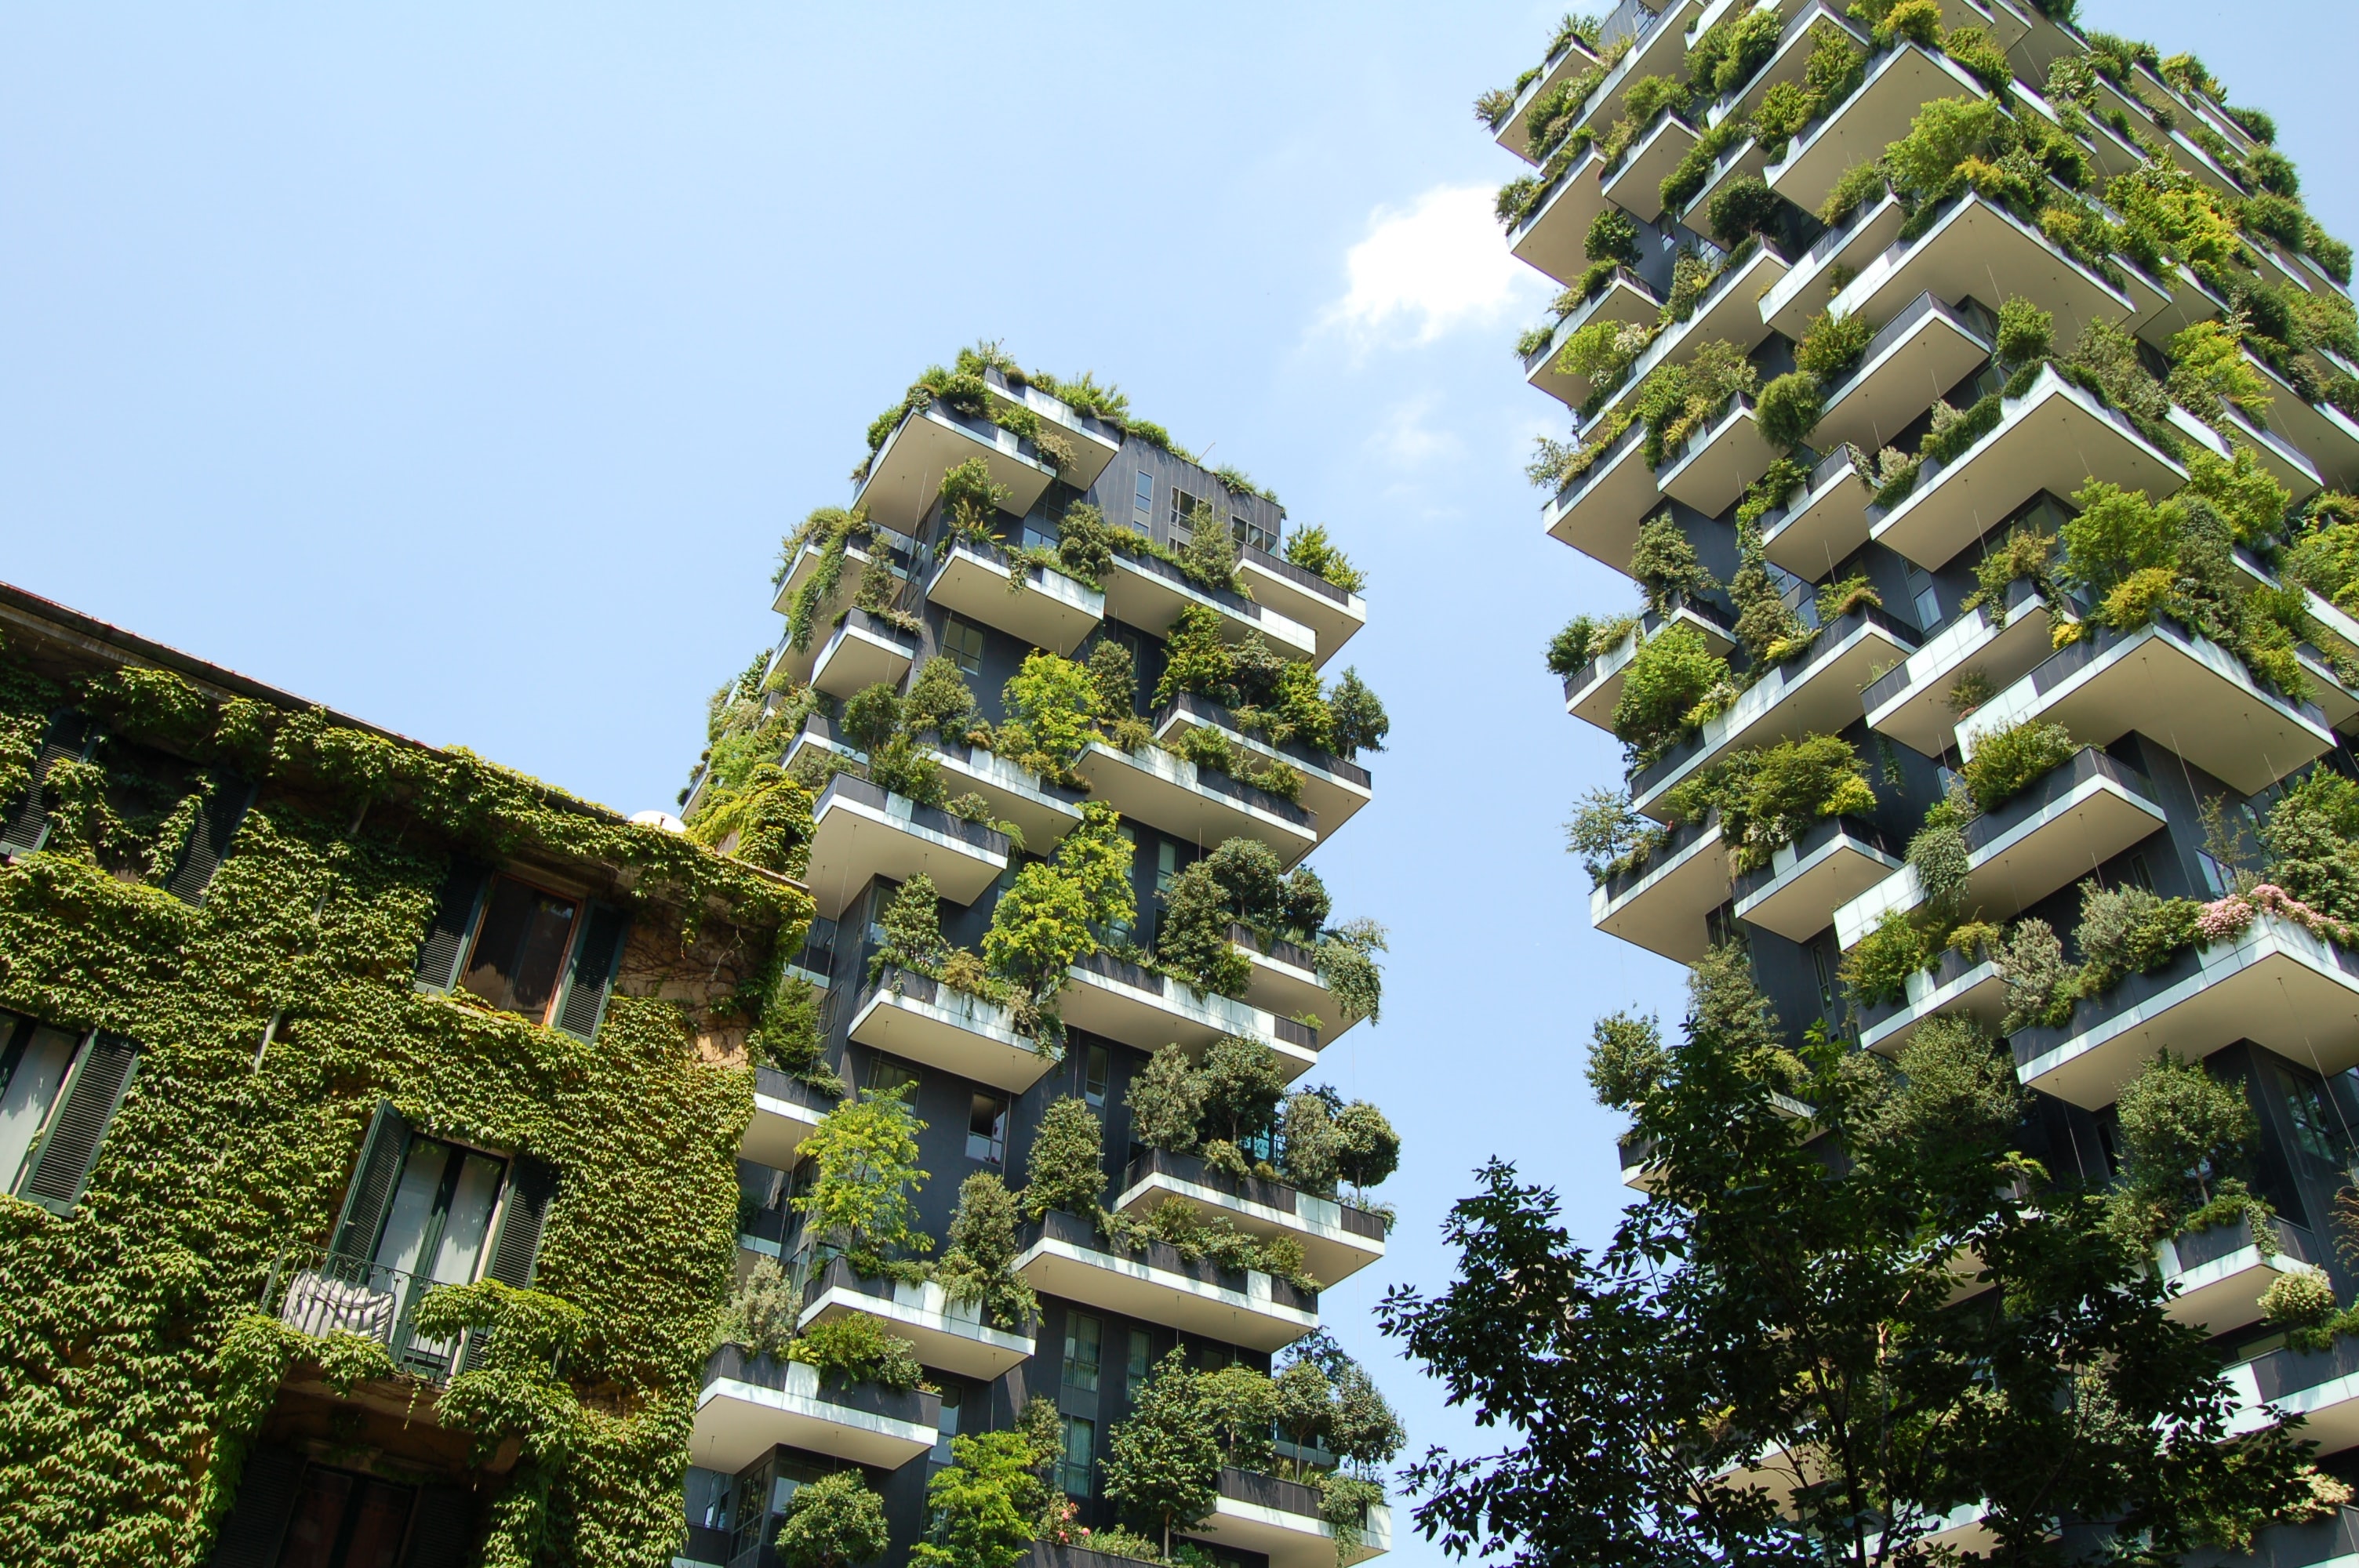 Città verdi: infrastrutture urbane per rispondere efficacemente ai cambiamenti climatici